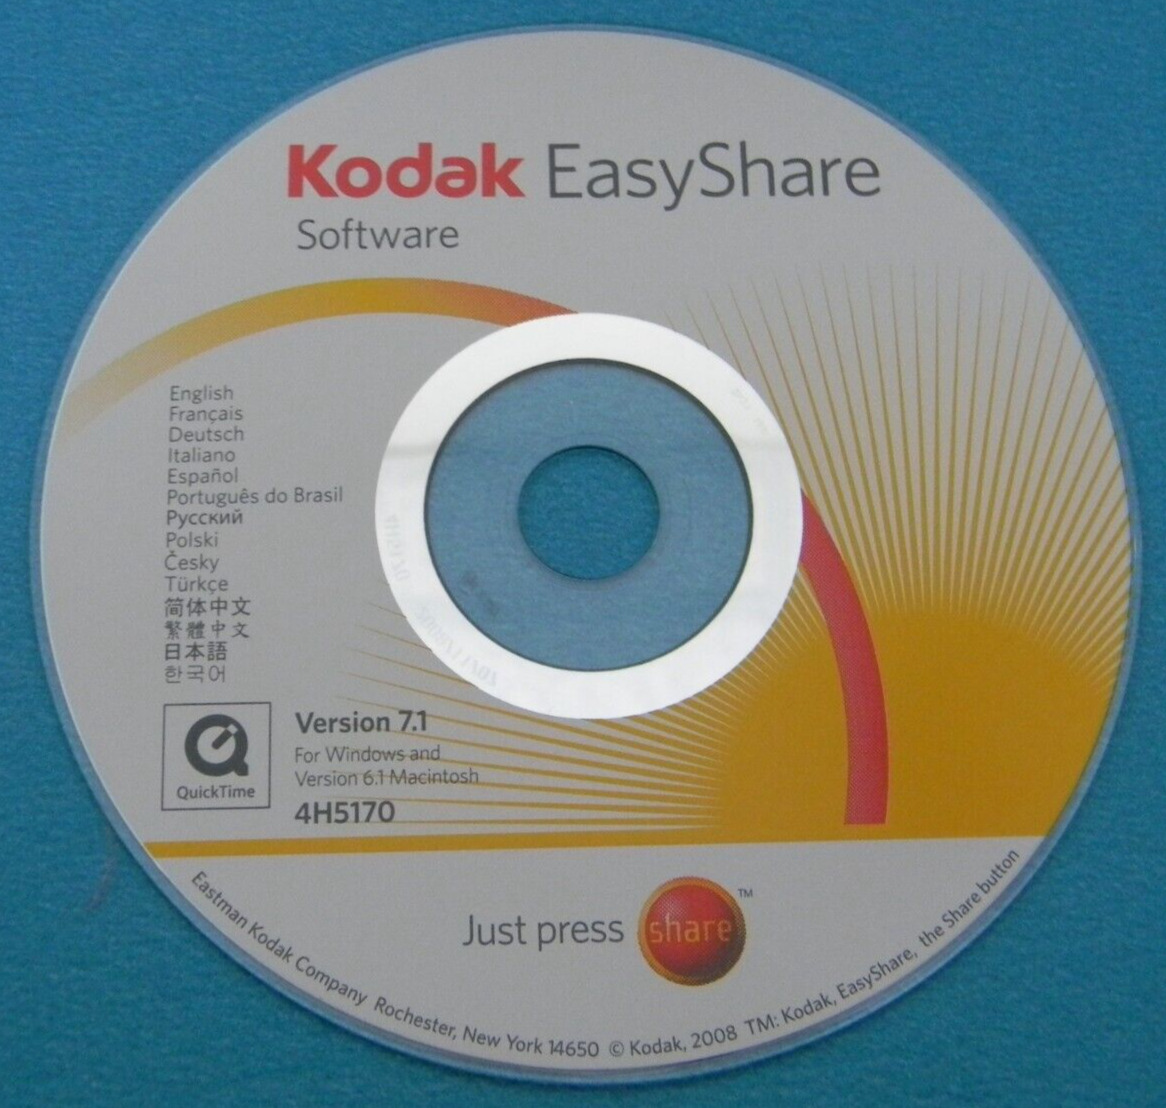 KODAK EASYSHARE VERSION 7.1 ORIGINAL SOFTWARE CD-ROM WINDOWS AND MACINTOSH